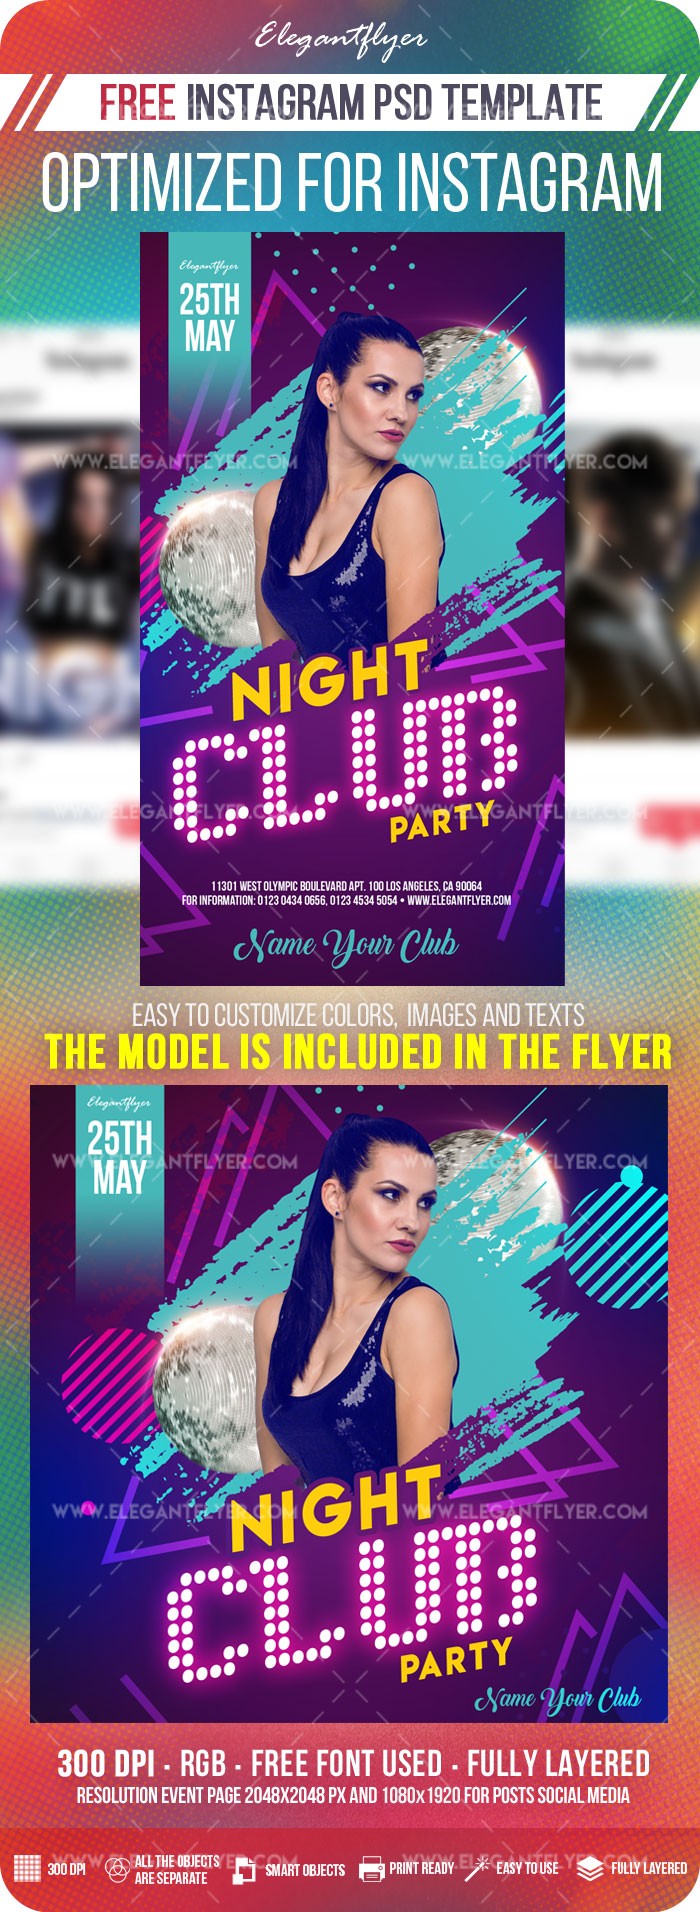 Night Club Party Instagram by ElegantFlyer